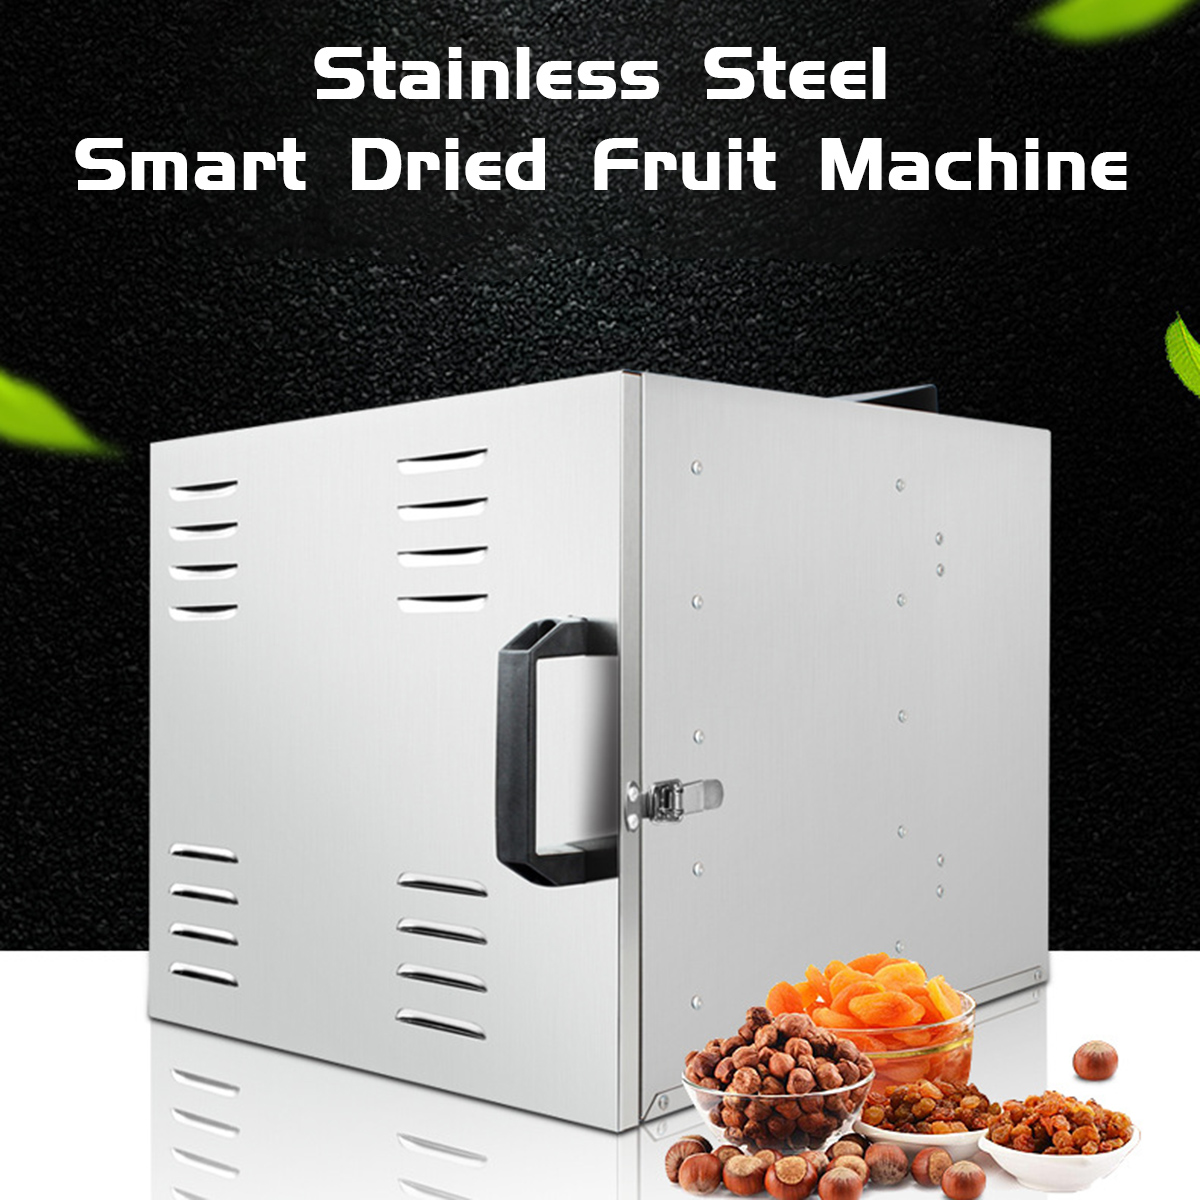 Food-Dehydrator-220V-1000W-Stainless-Steel-Yogurt-Fruit-Dryer-USEUAU-Plug-1759407-7